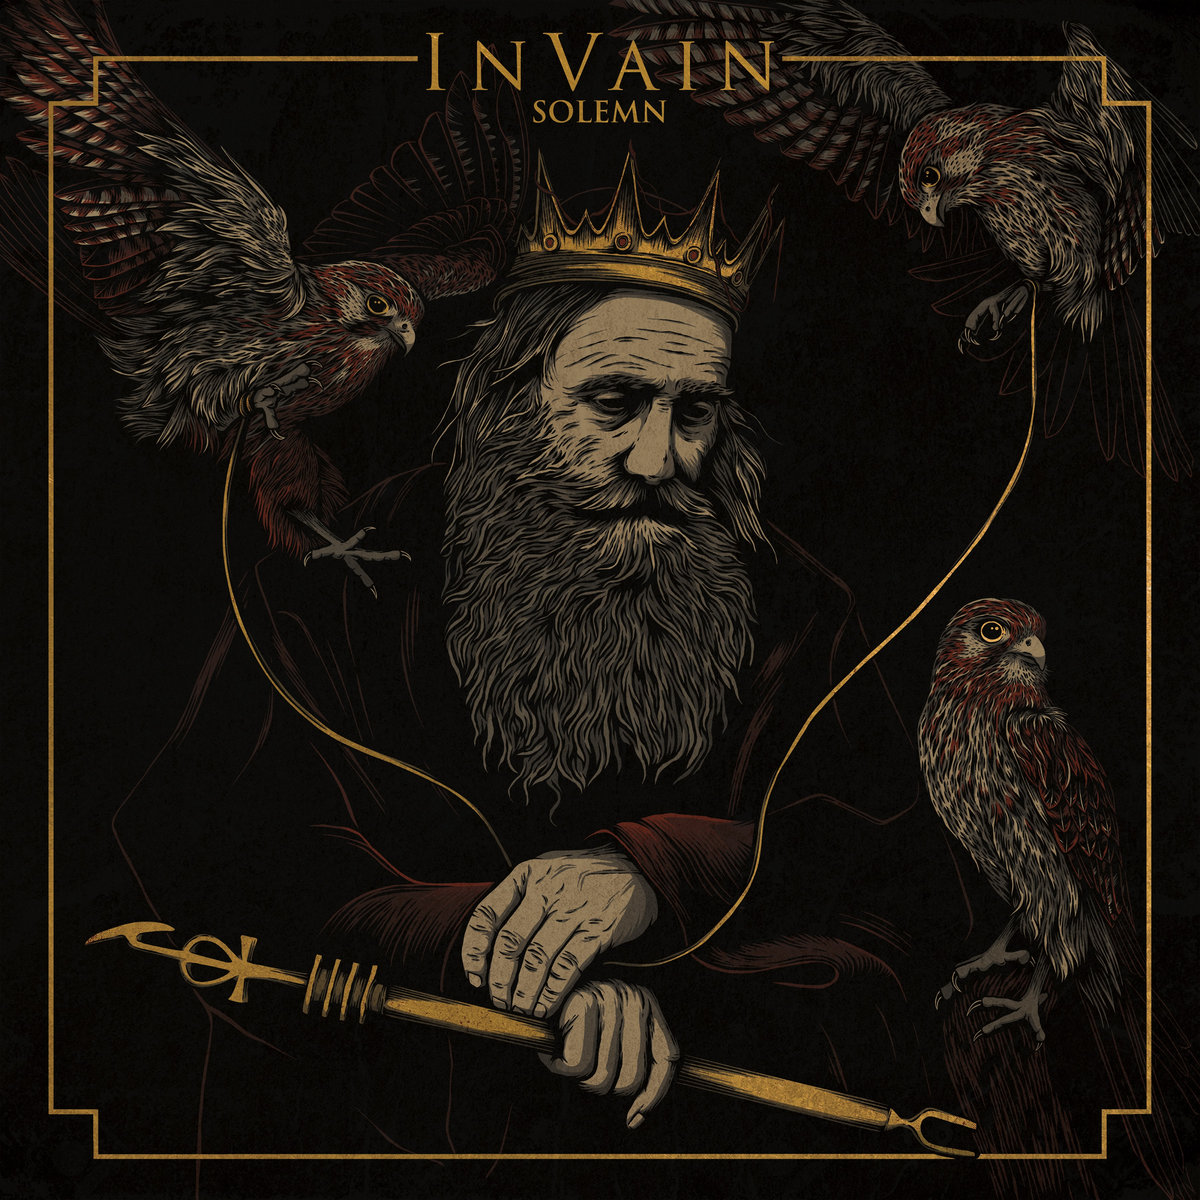 🎤 In Vain
💿 Solemn
⌛️ 1:00:00
🎸 Death/Black Metal Progresivo
🌍 Noruega 🇳🇴
📅 19-04-24  🆕
➡️ invainband.bandcamp.com/album/solemn
➡️ open.spotify.com/intl-es/album/…

📄 metal-archives.com/bands/In_Vain/…
🌐 facebook.com/InVainOfficial/
🌐 @Invainofficial

#SepulMetal  #HeardAndShared #IndieRecordings